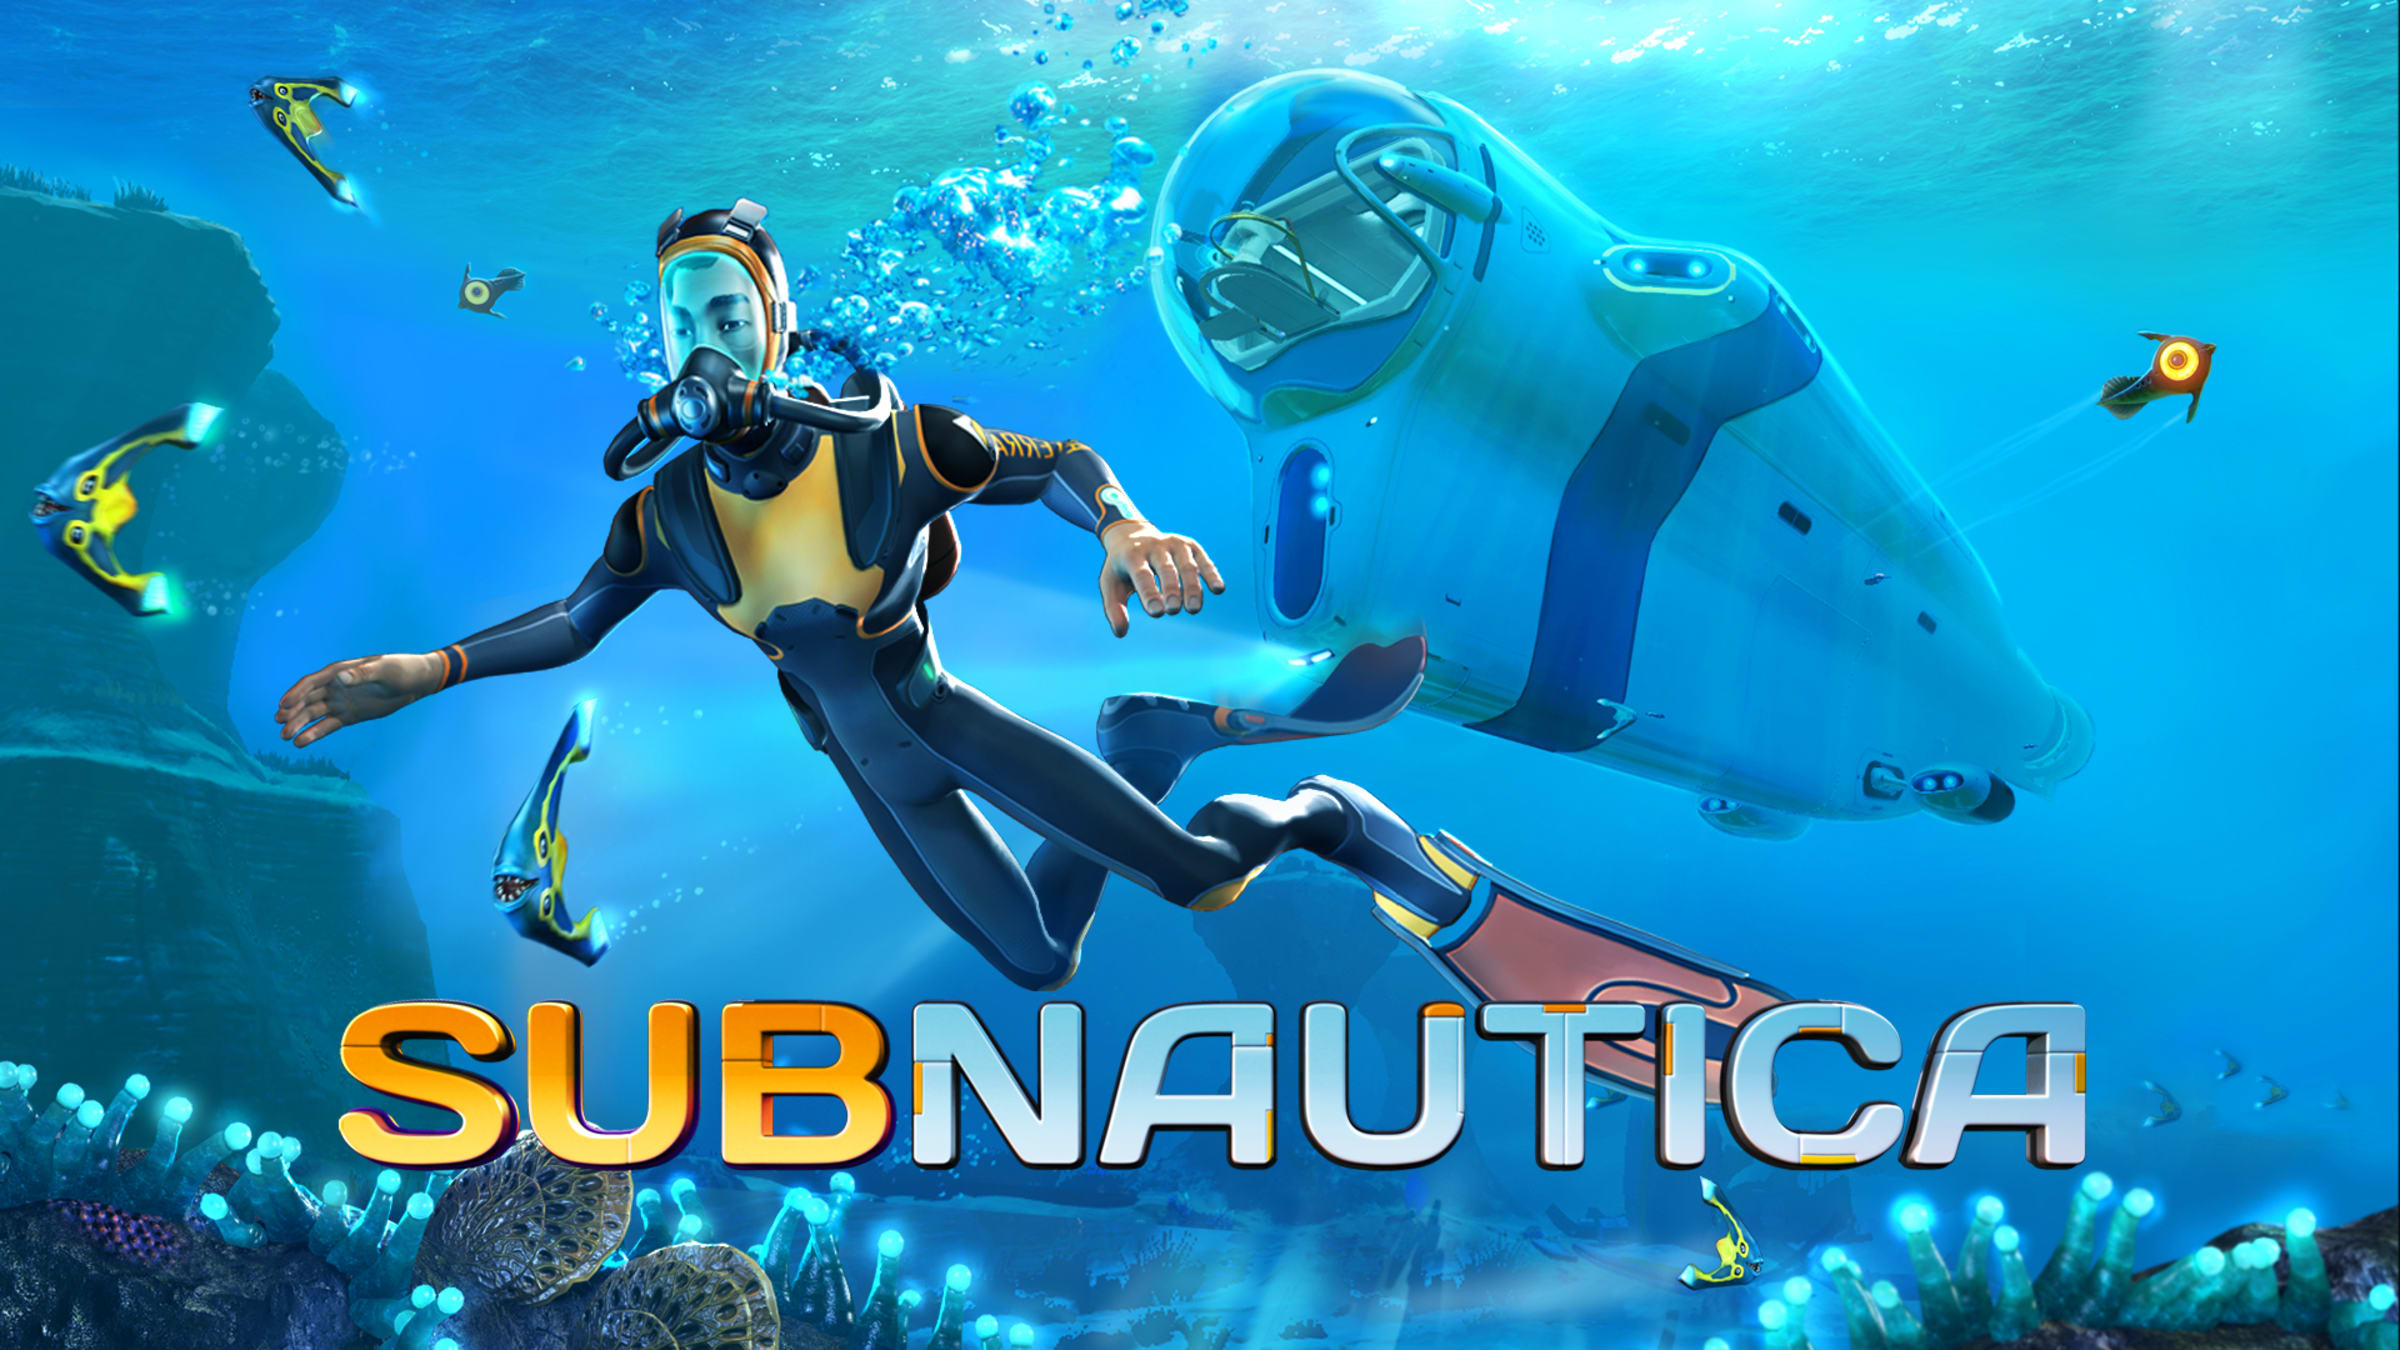 Subnautica (PC Digital Download) $9.89, Subnautica: Below Zero (PC Digital Download) $9.89 & More